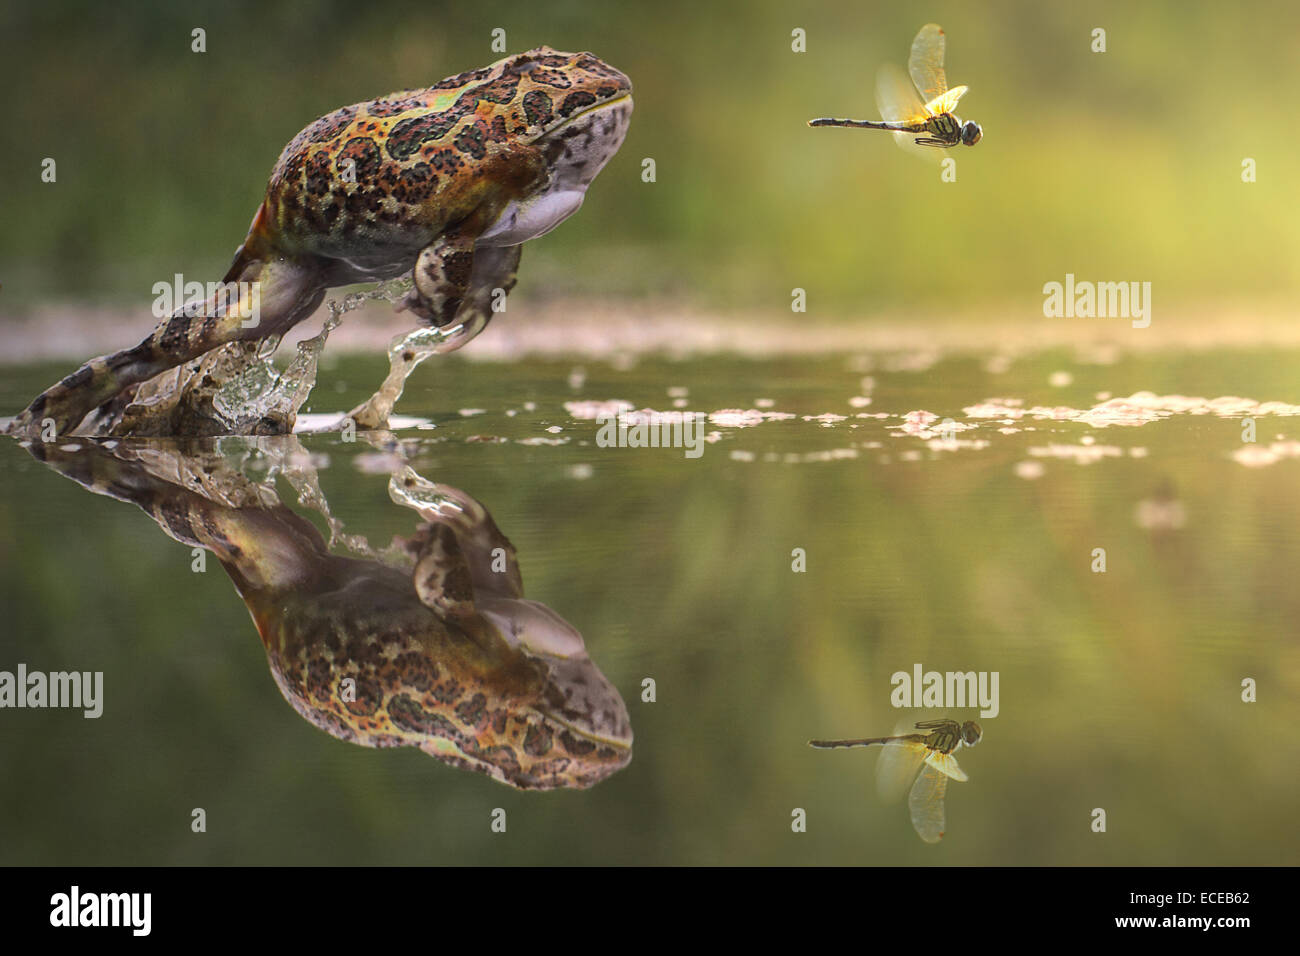 Frog chasing damselfly, Indonesia Stock Photo